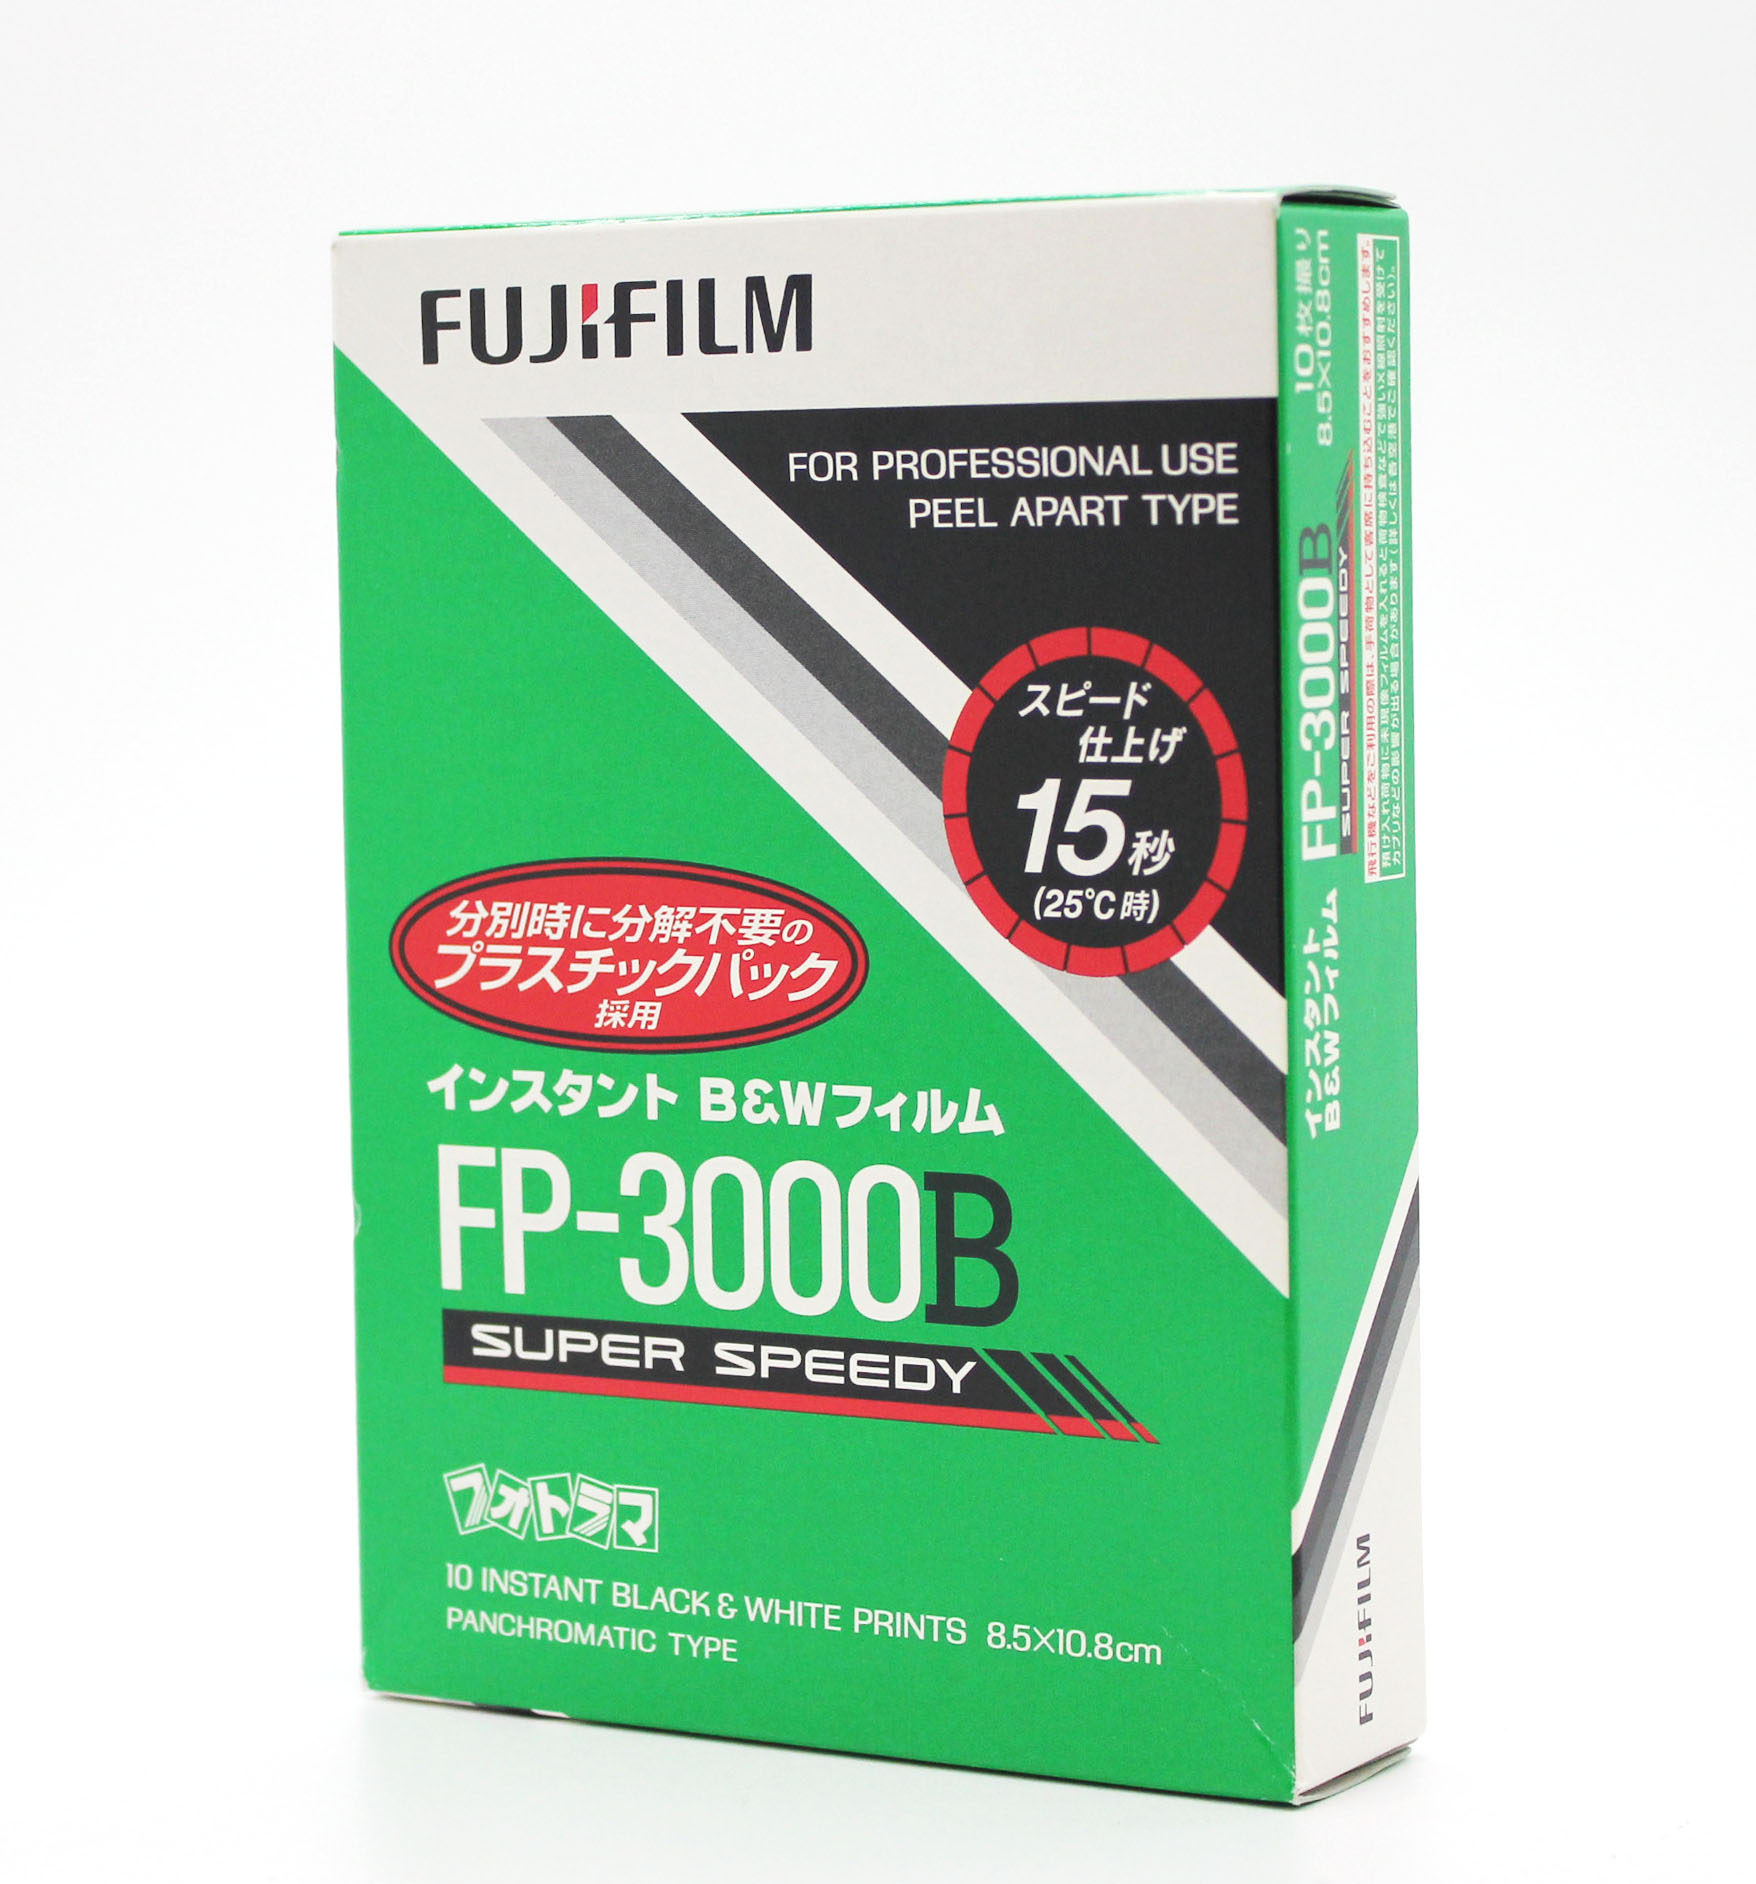  Fuji Fujifilm FP-3000B 8.5x10.8cm Instant Black & White Film (Expired 09/2013) from Japan Photo 0